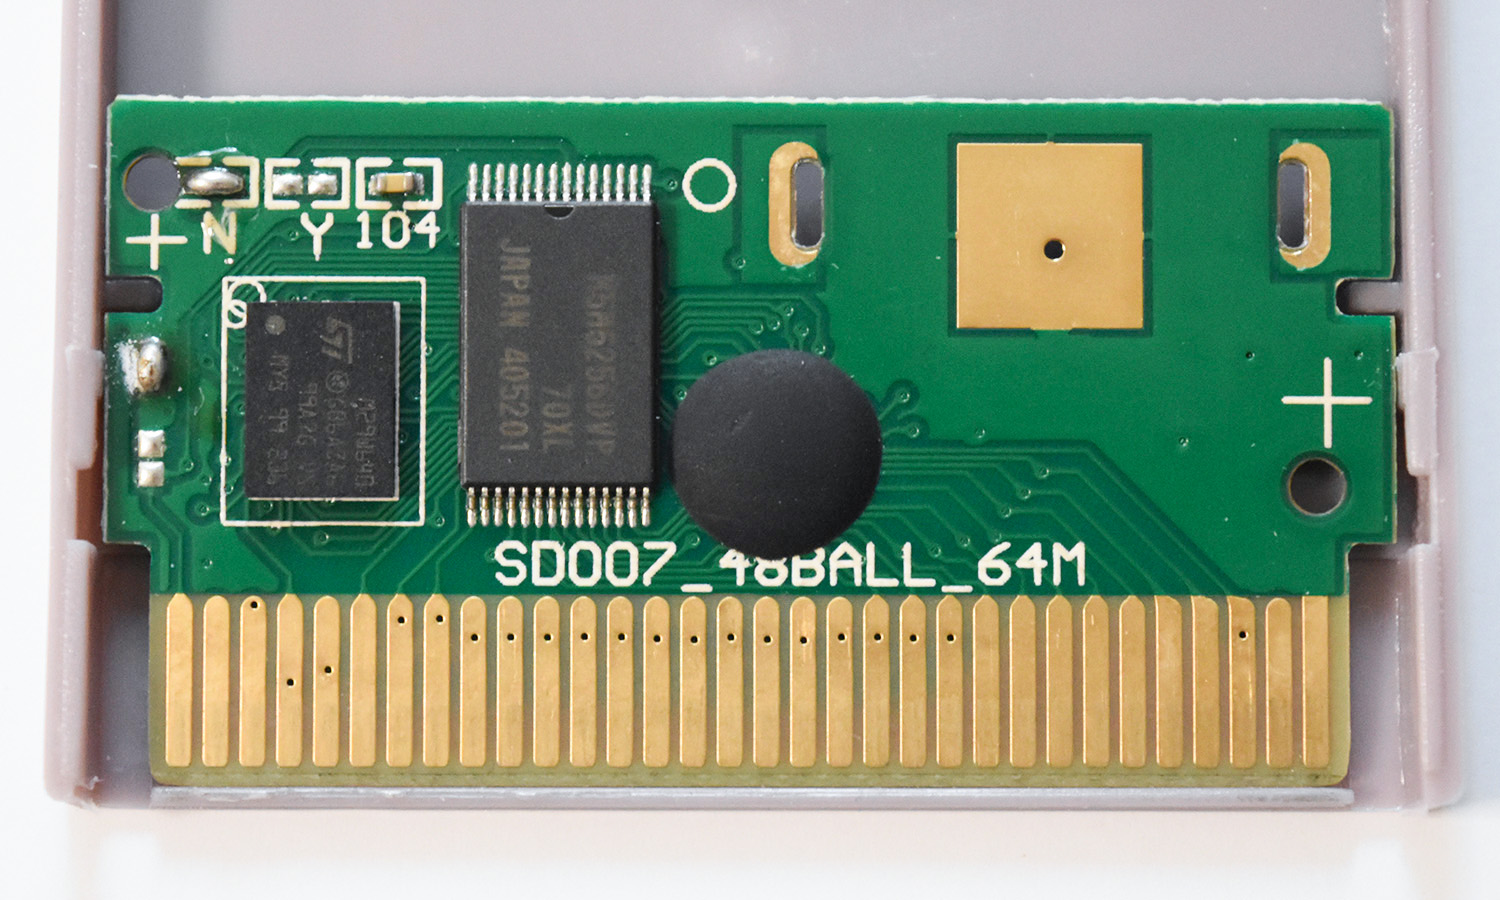 SD007 48BALL 64M - M29W640 (Pokémon Silver).jpg